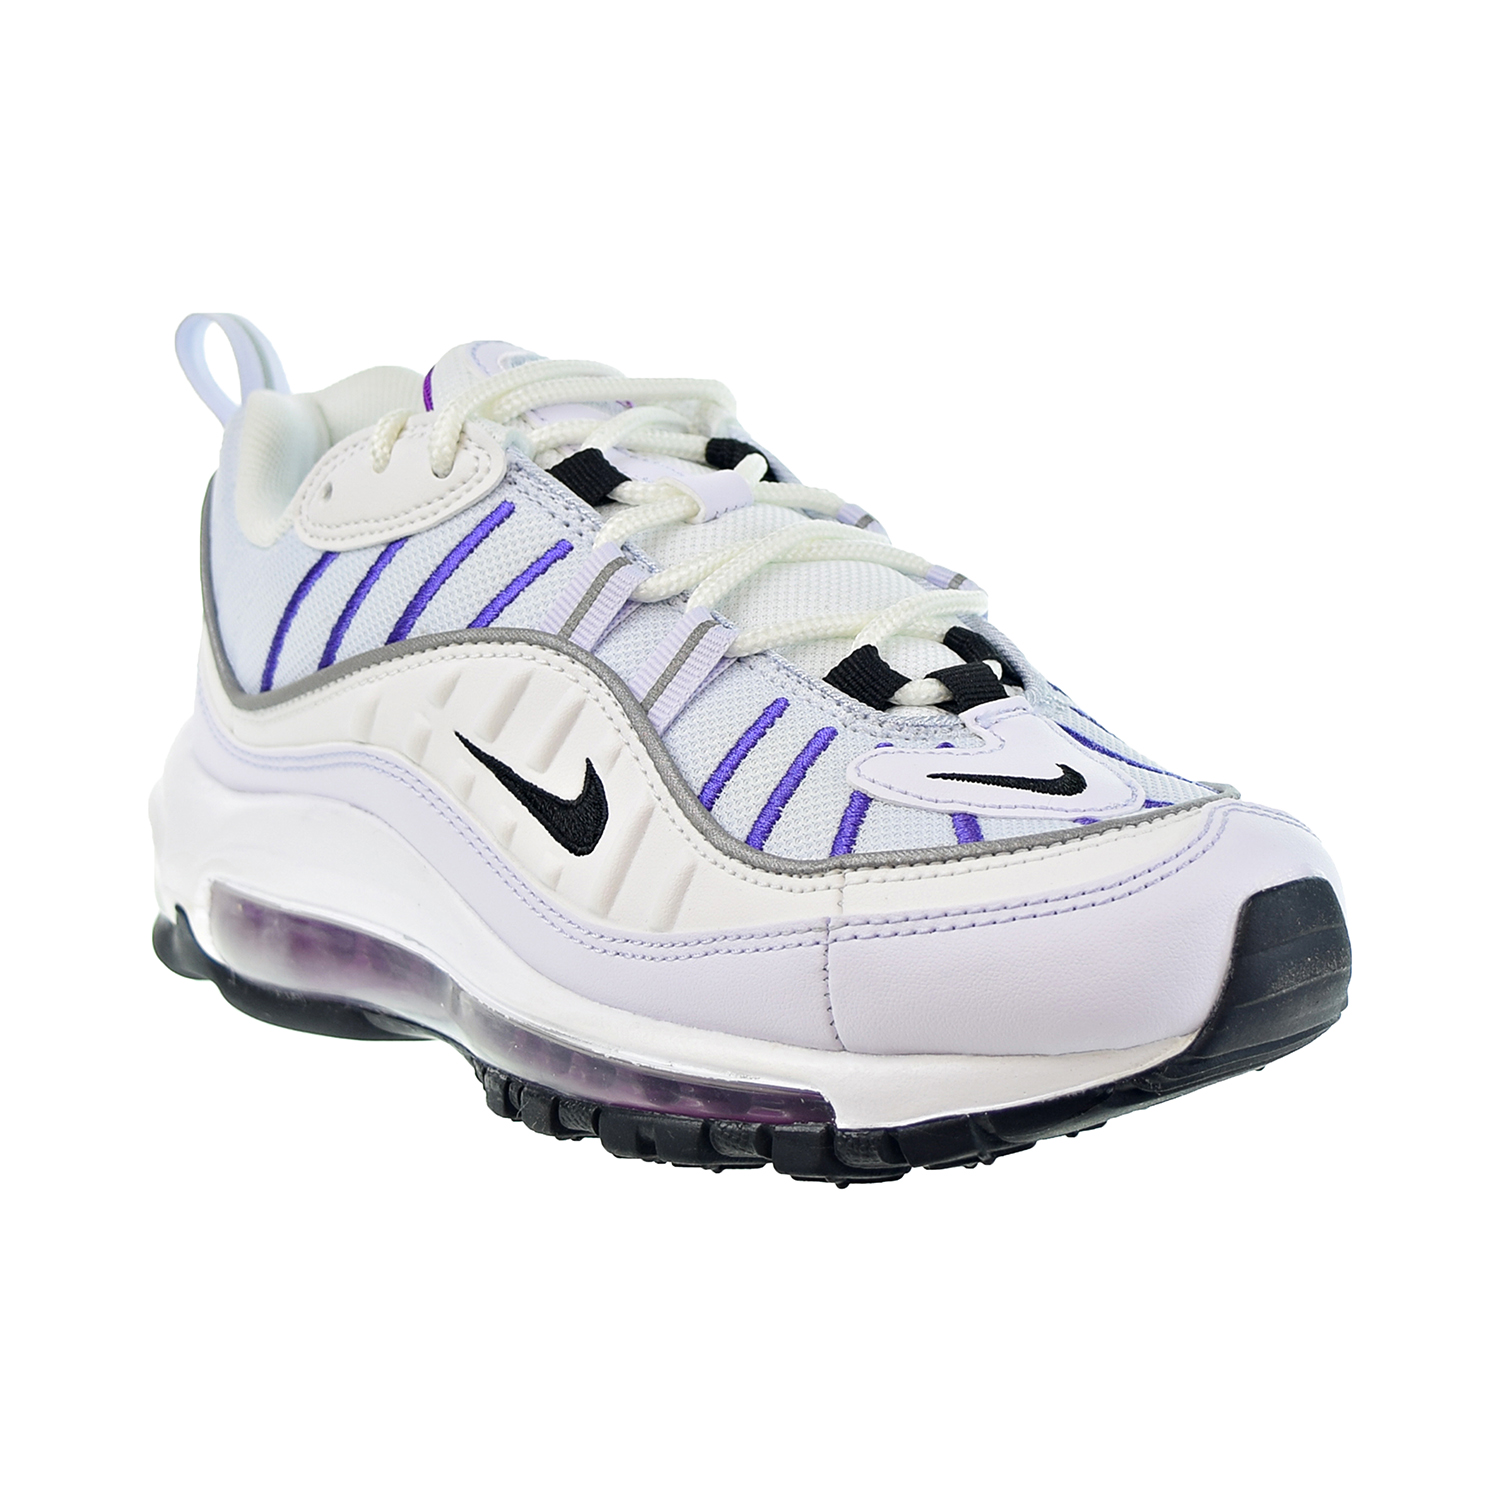 Nike Air Max 98 Women's Shoes Football Grey-Black ah6799-023 - image 2 of 6